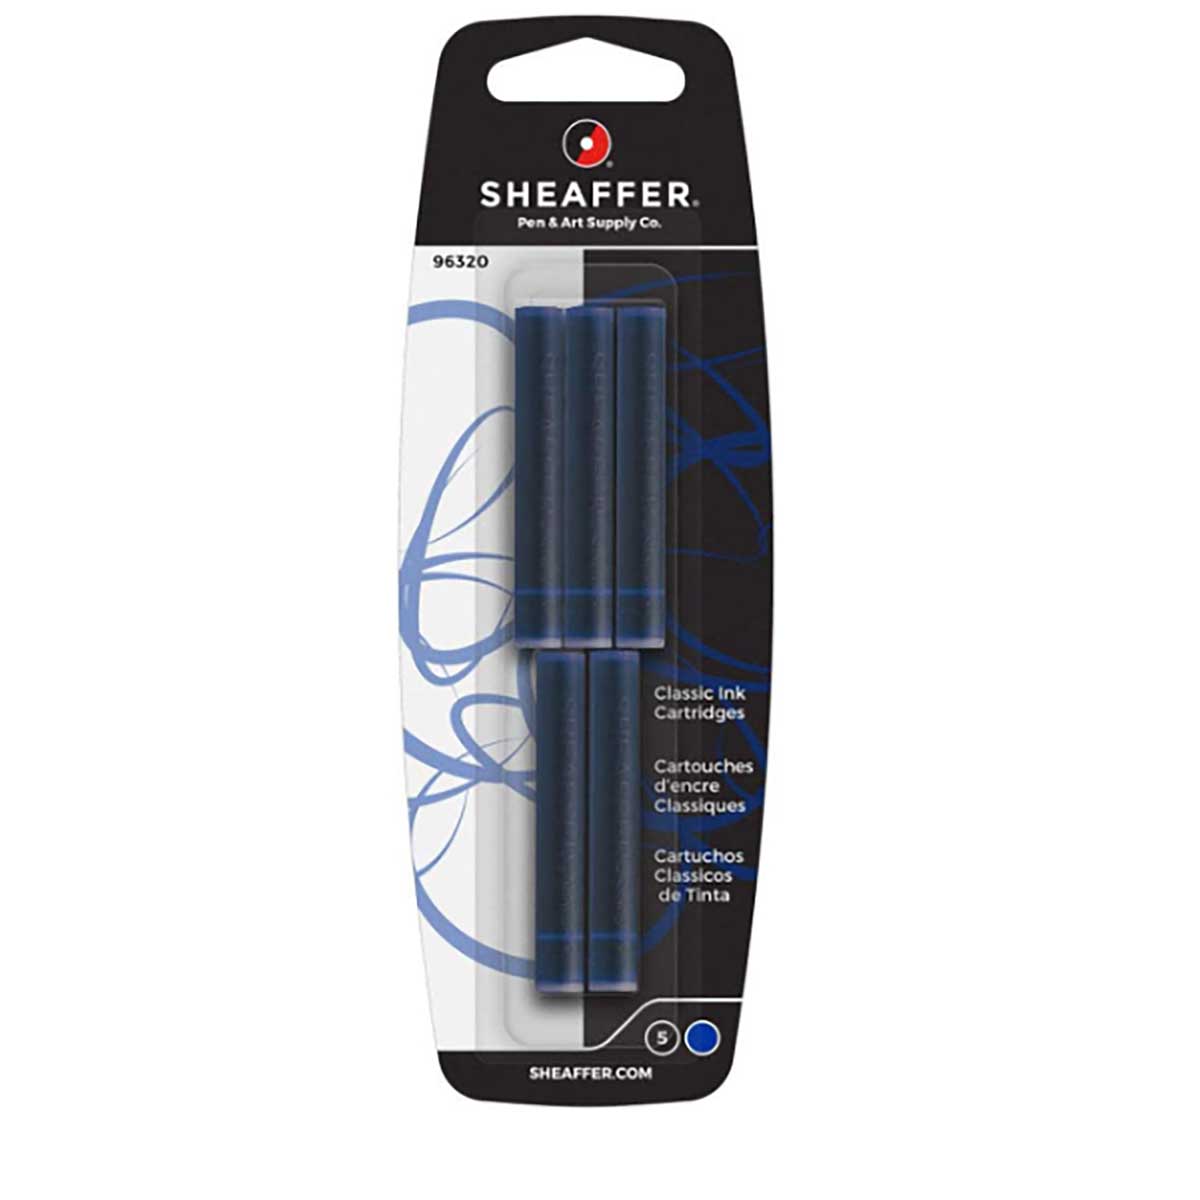 Sheaffer Fountain Pen Ink Cartridges Blue 96320 Pack of 5